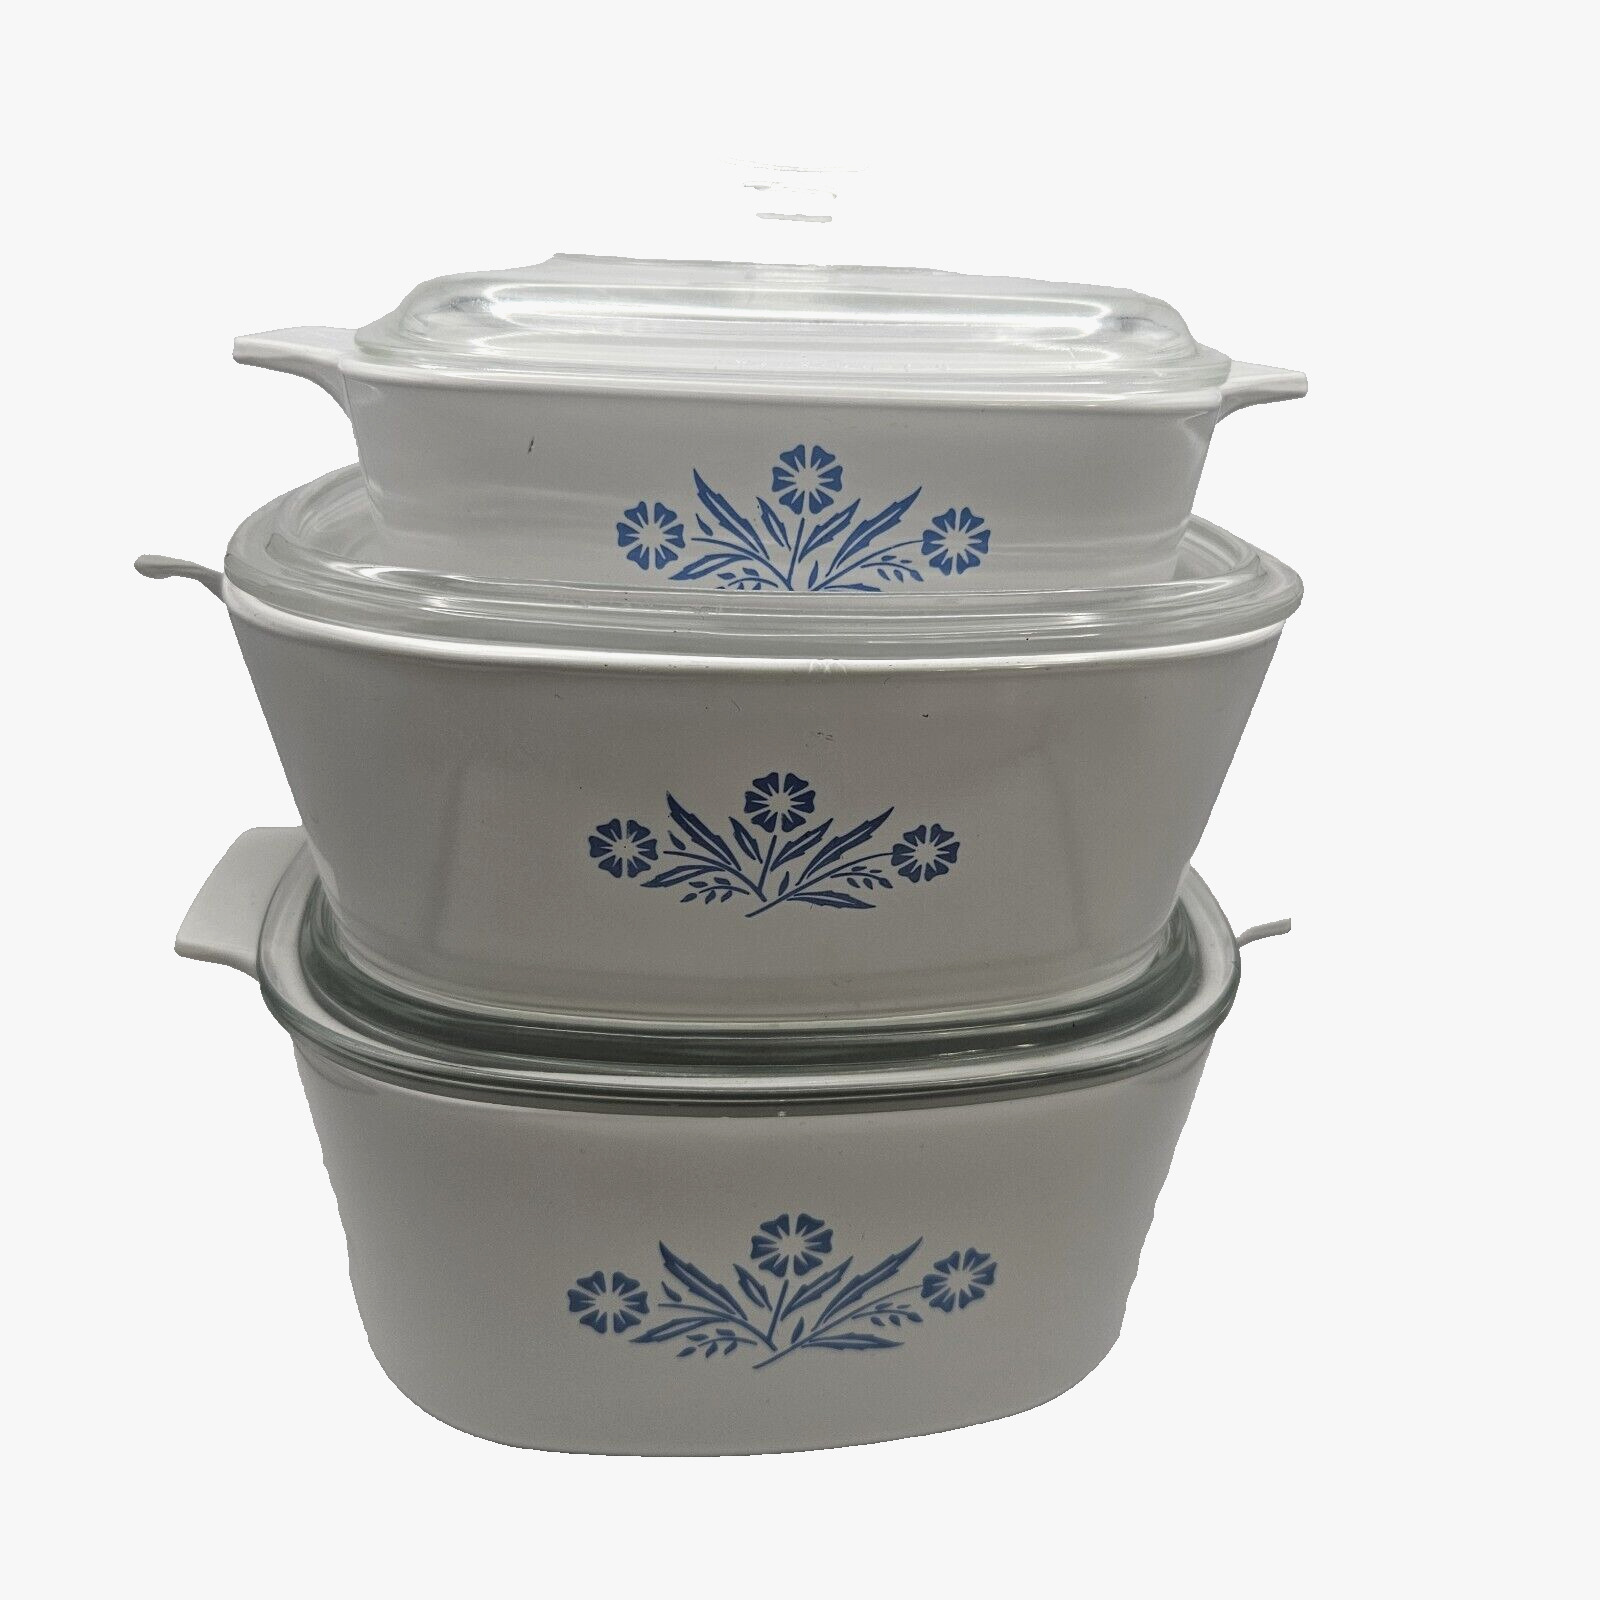 Corning Ware Blue Cornflower Casserole Dish lids A-3-B  A-1-B  P-2 1/2-B  6pc